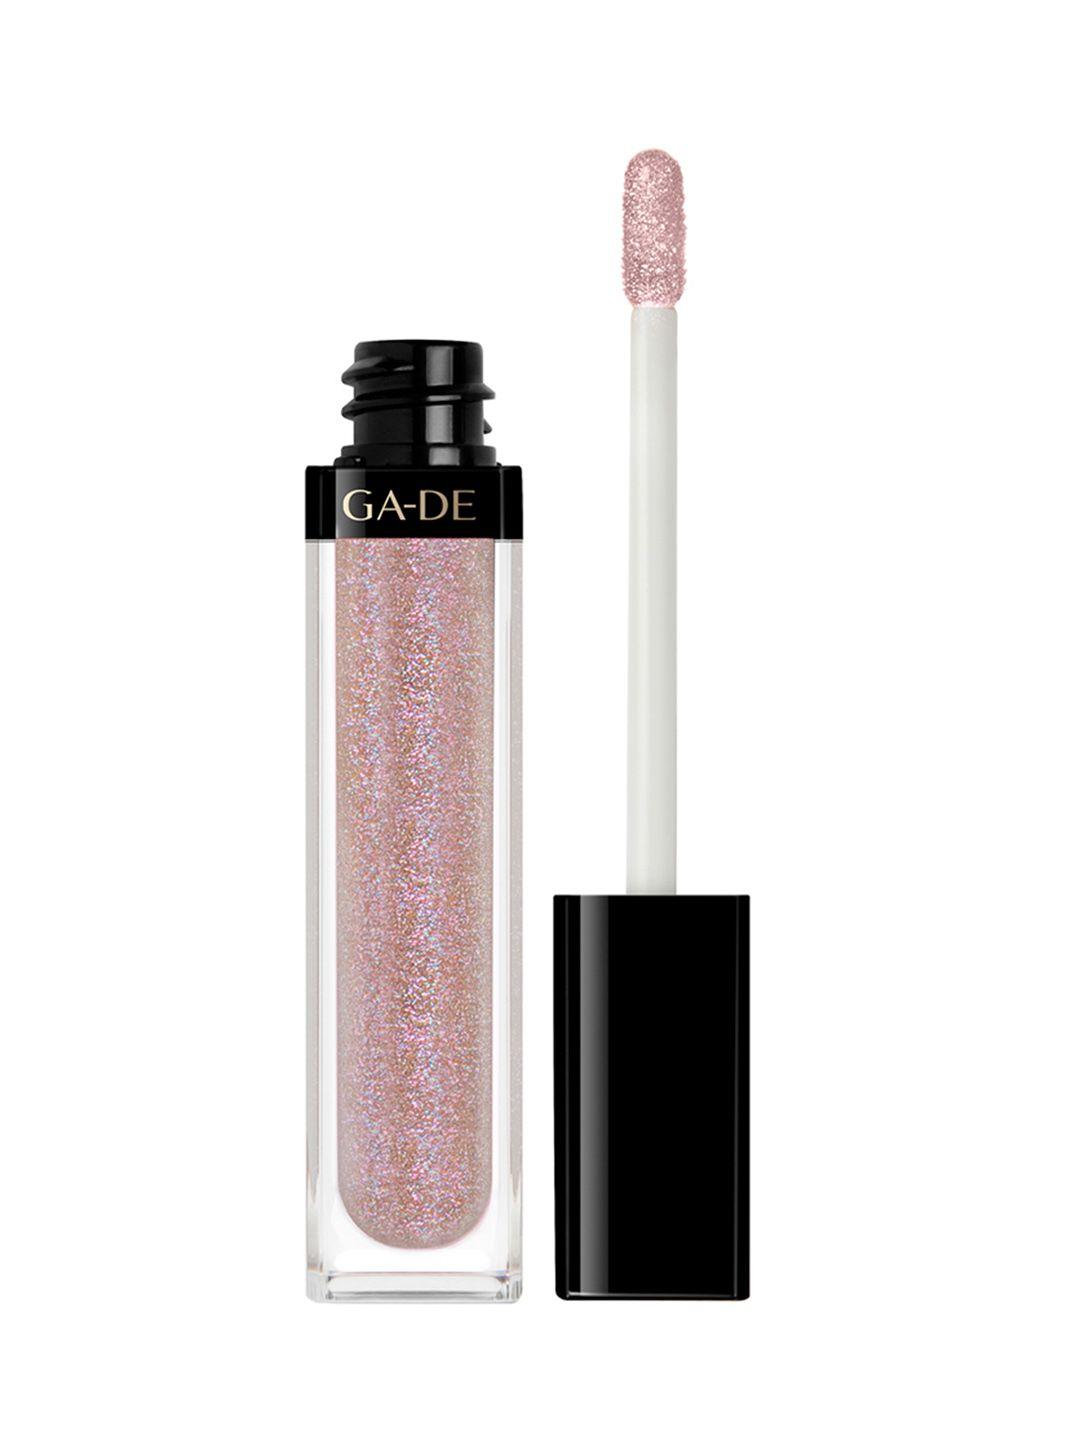 ga-de-long-lasting-&-moisturizing-crystal-lights-lip-gloss-6ml---bright-star-817